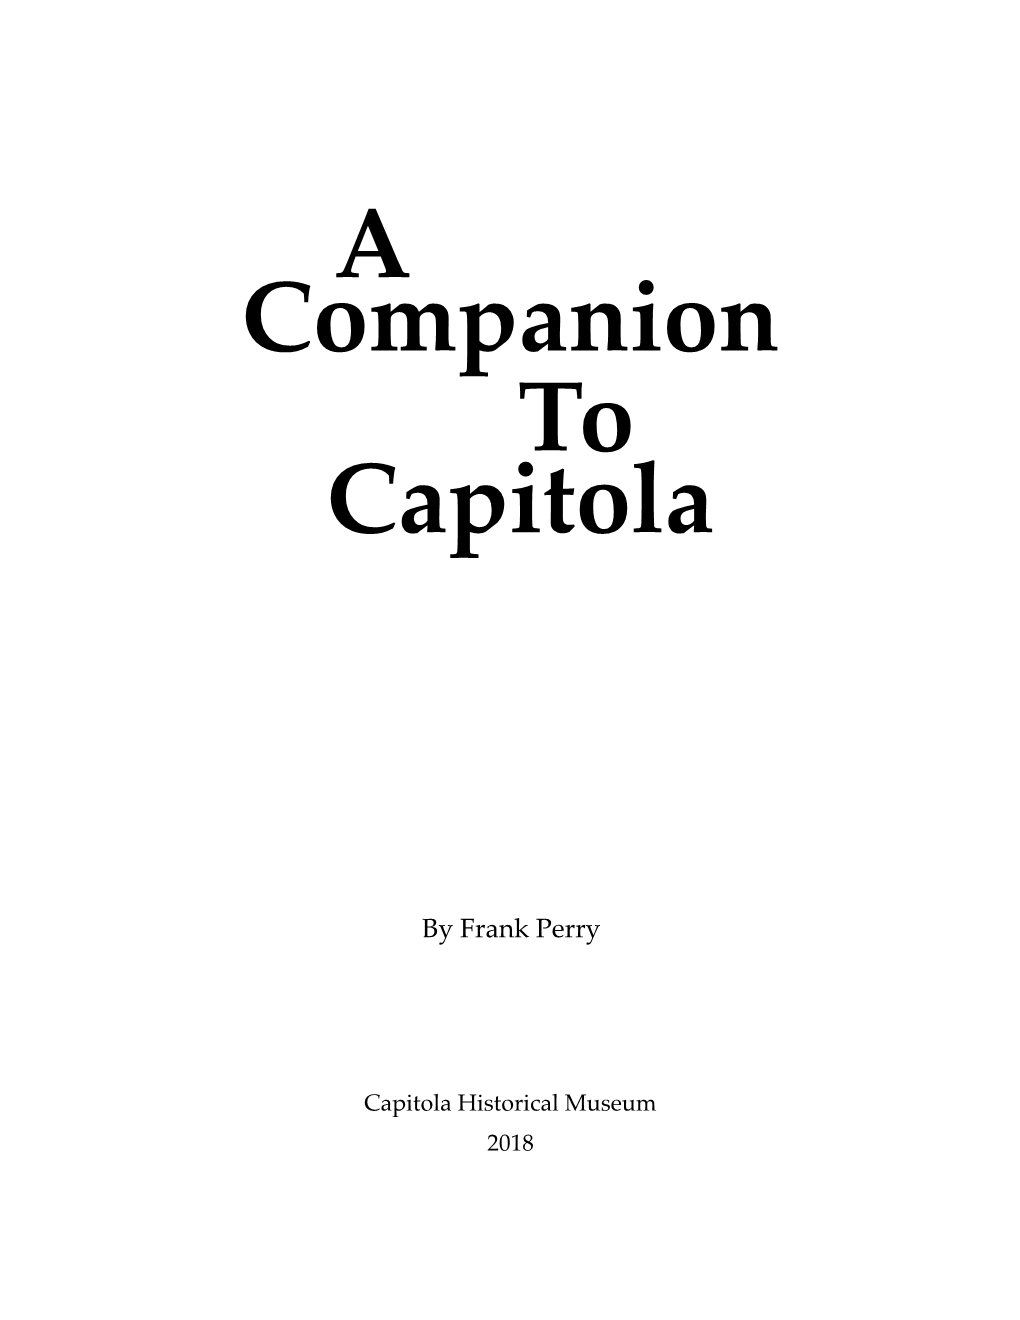 A Companion to Capitola 11-18